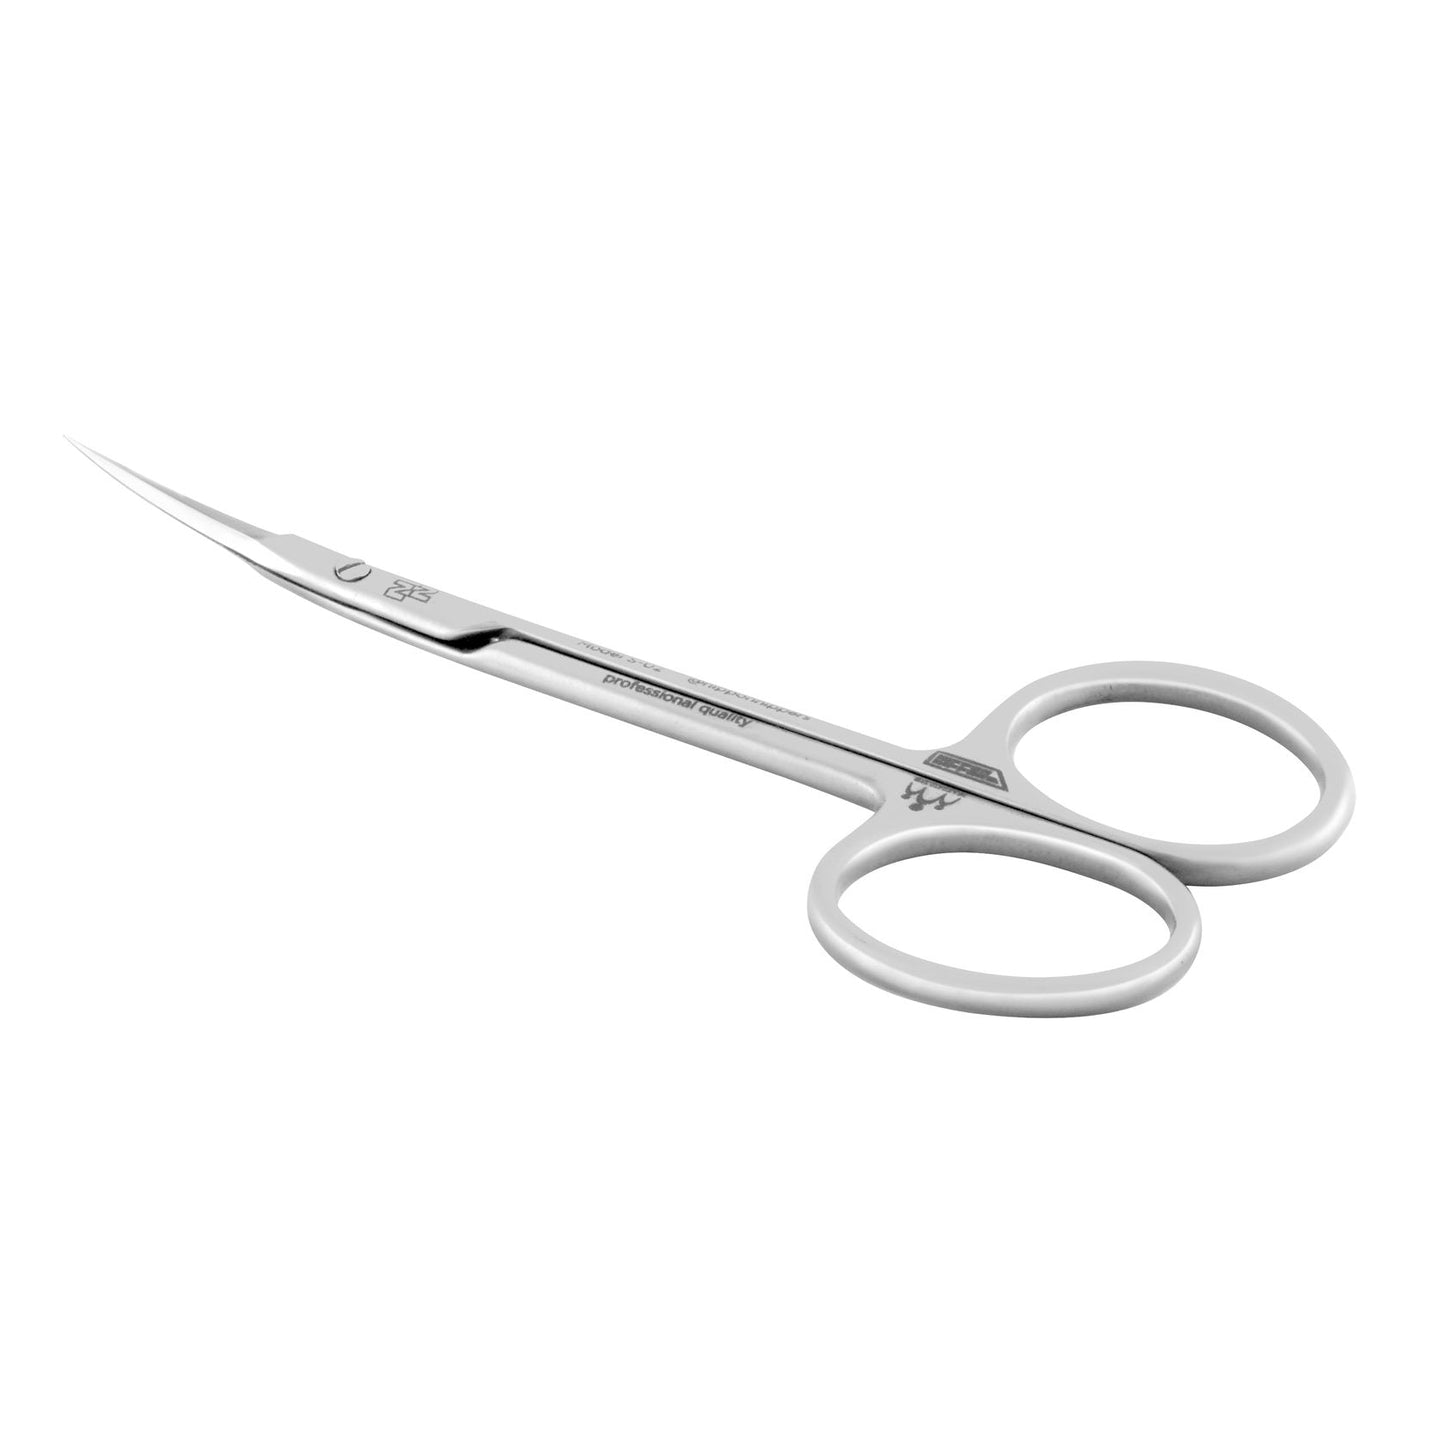 Cuticle scissors Nippon Nippers S-02